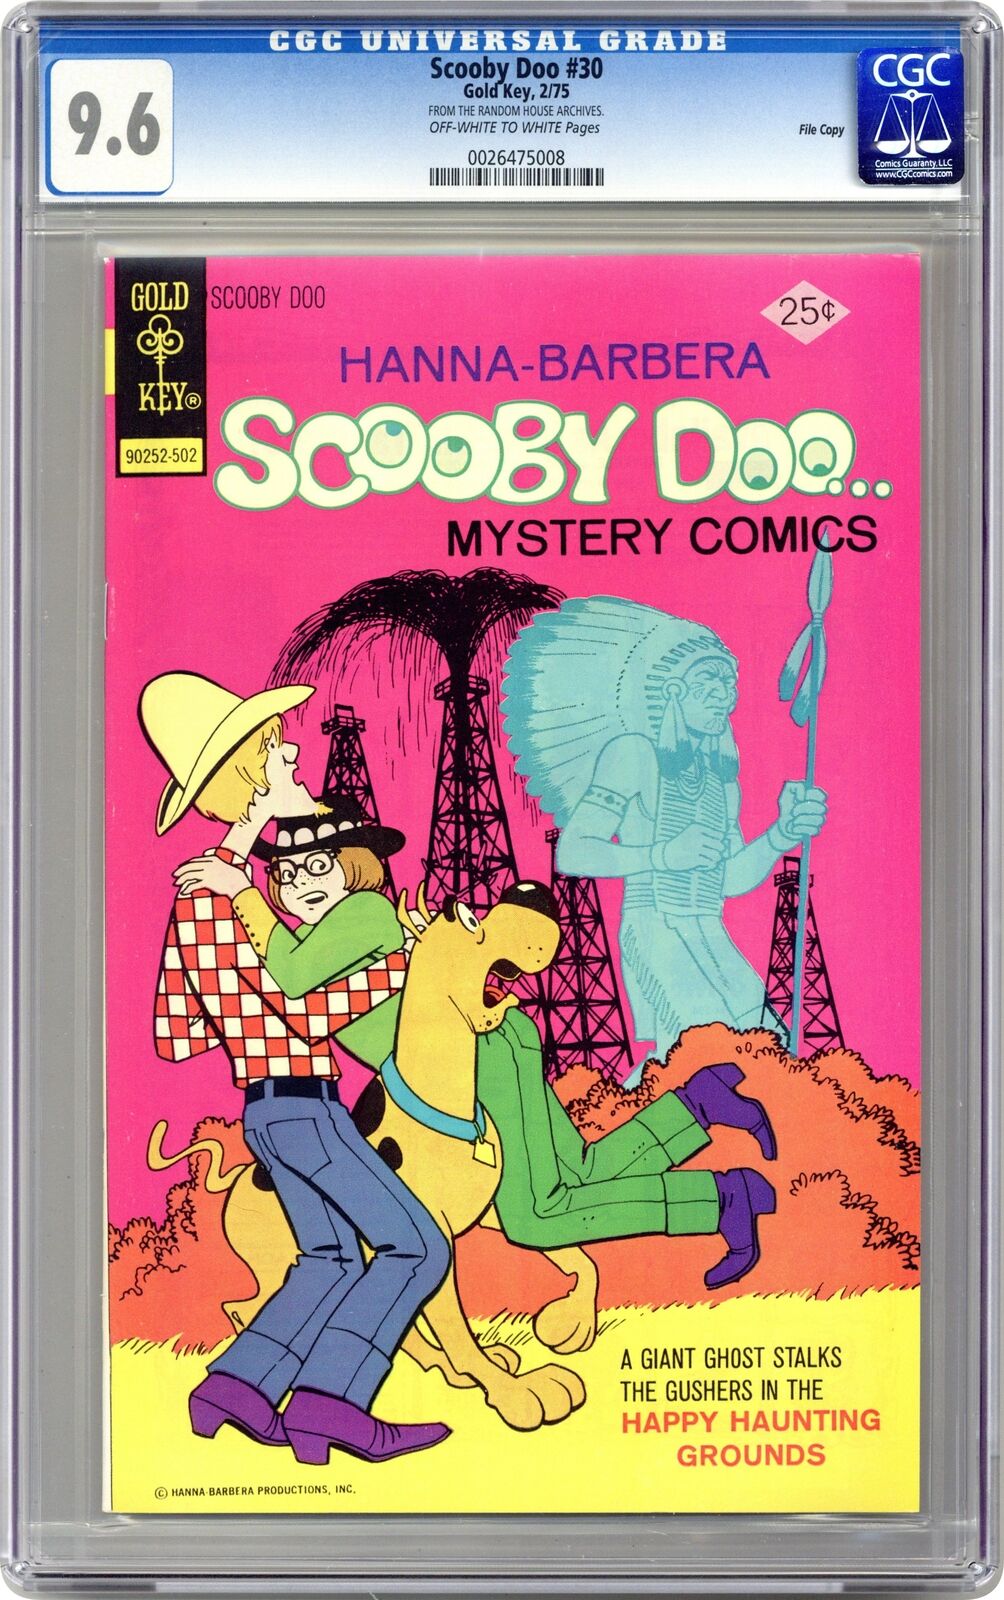 Scooby Doo #30 CGC 9.6 1975 Gold Key 0026475008